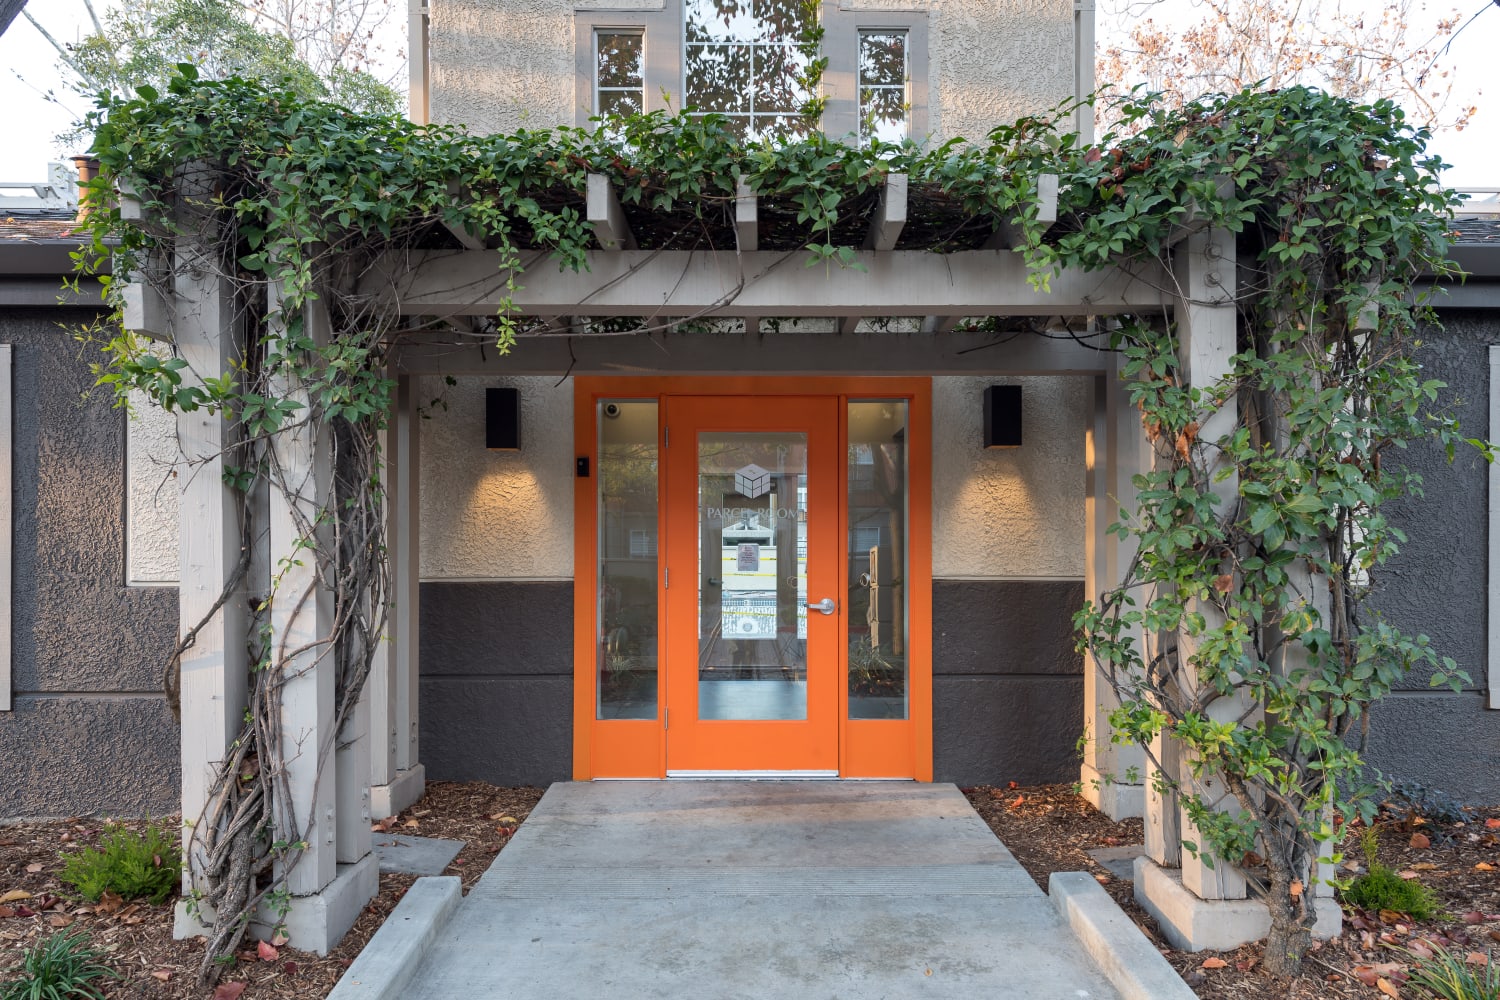 Our apartments at Bella Vista Apartments in Santa Clara, California offer a parcel room